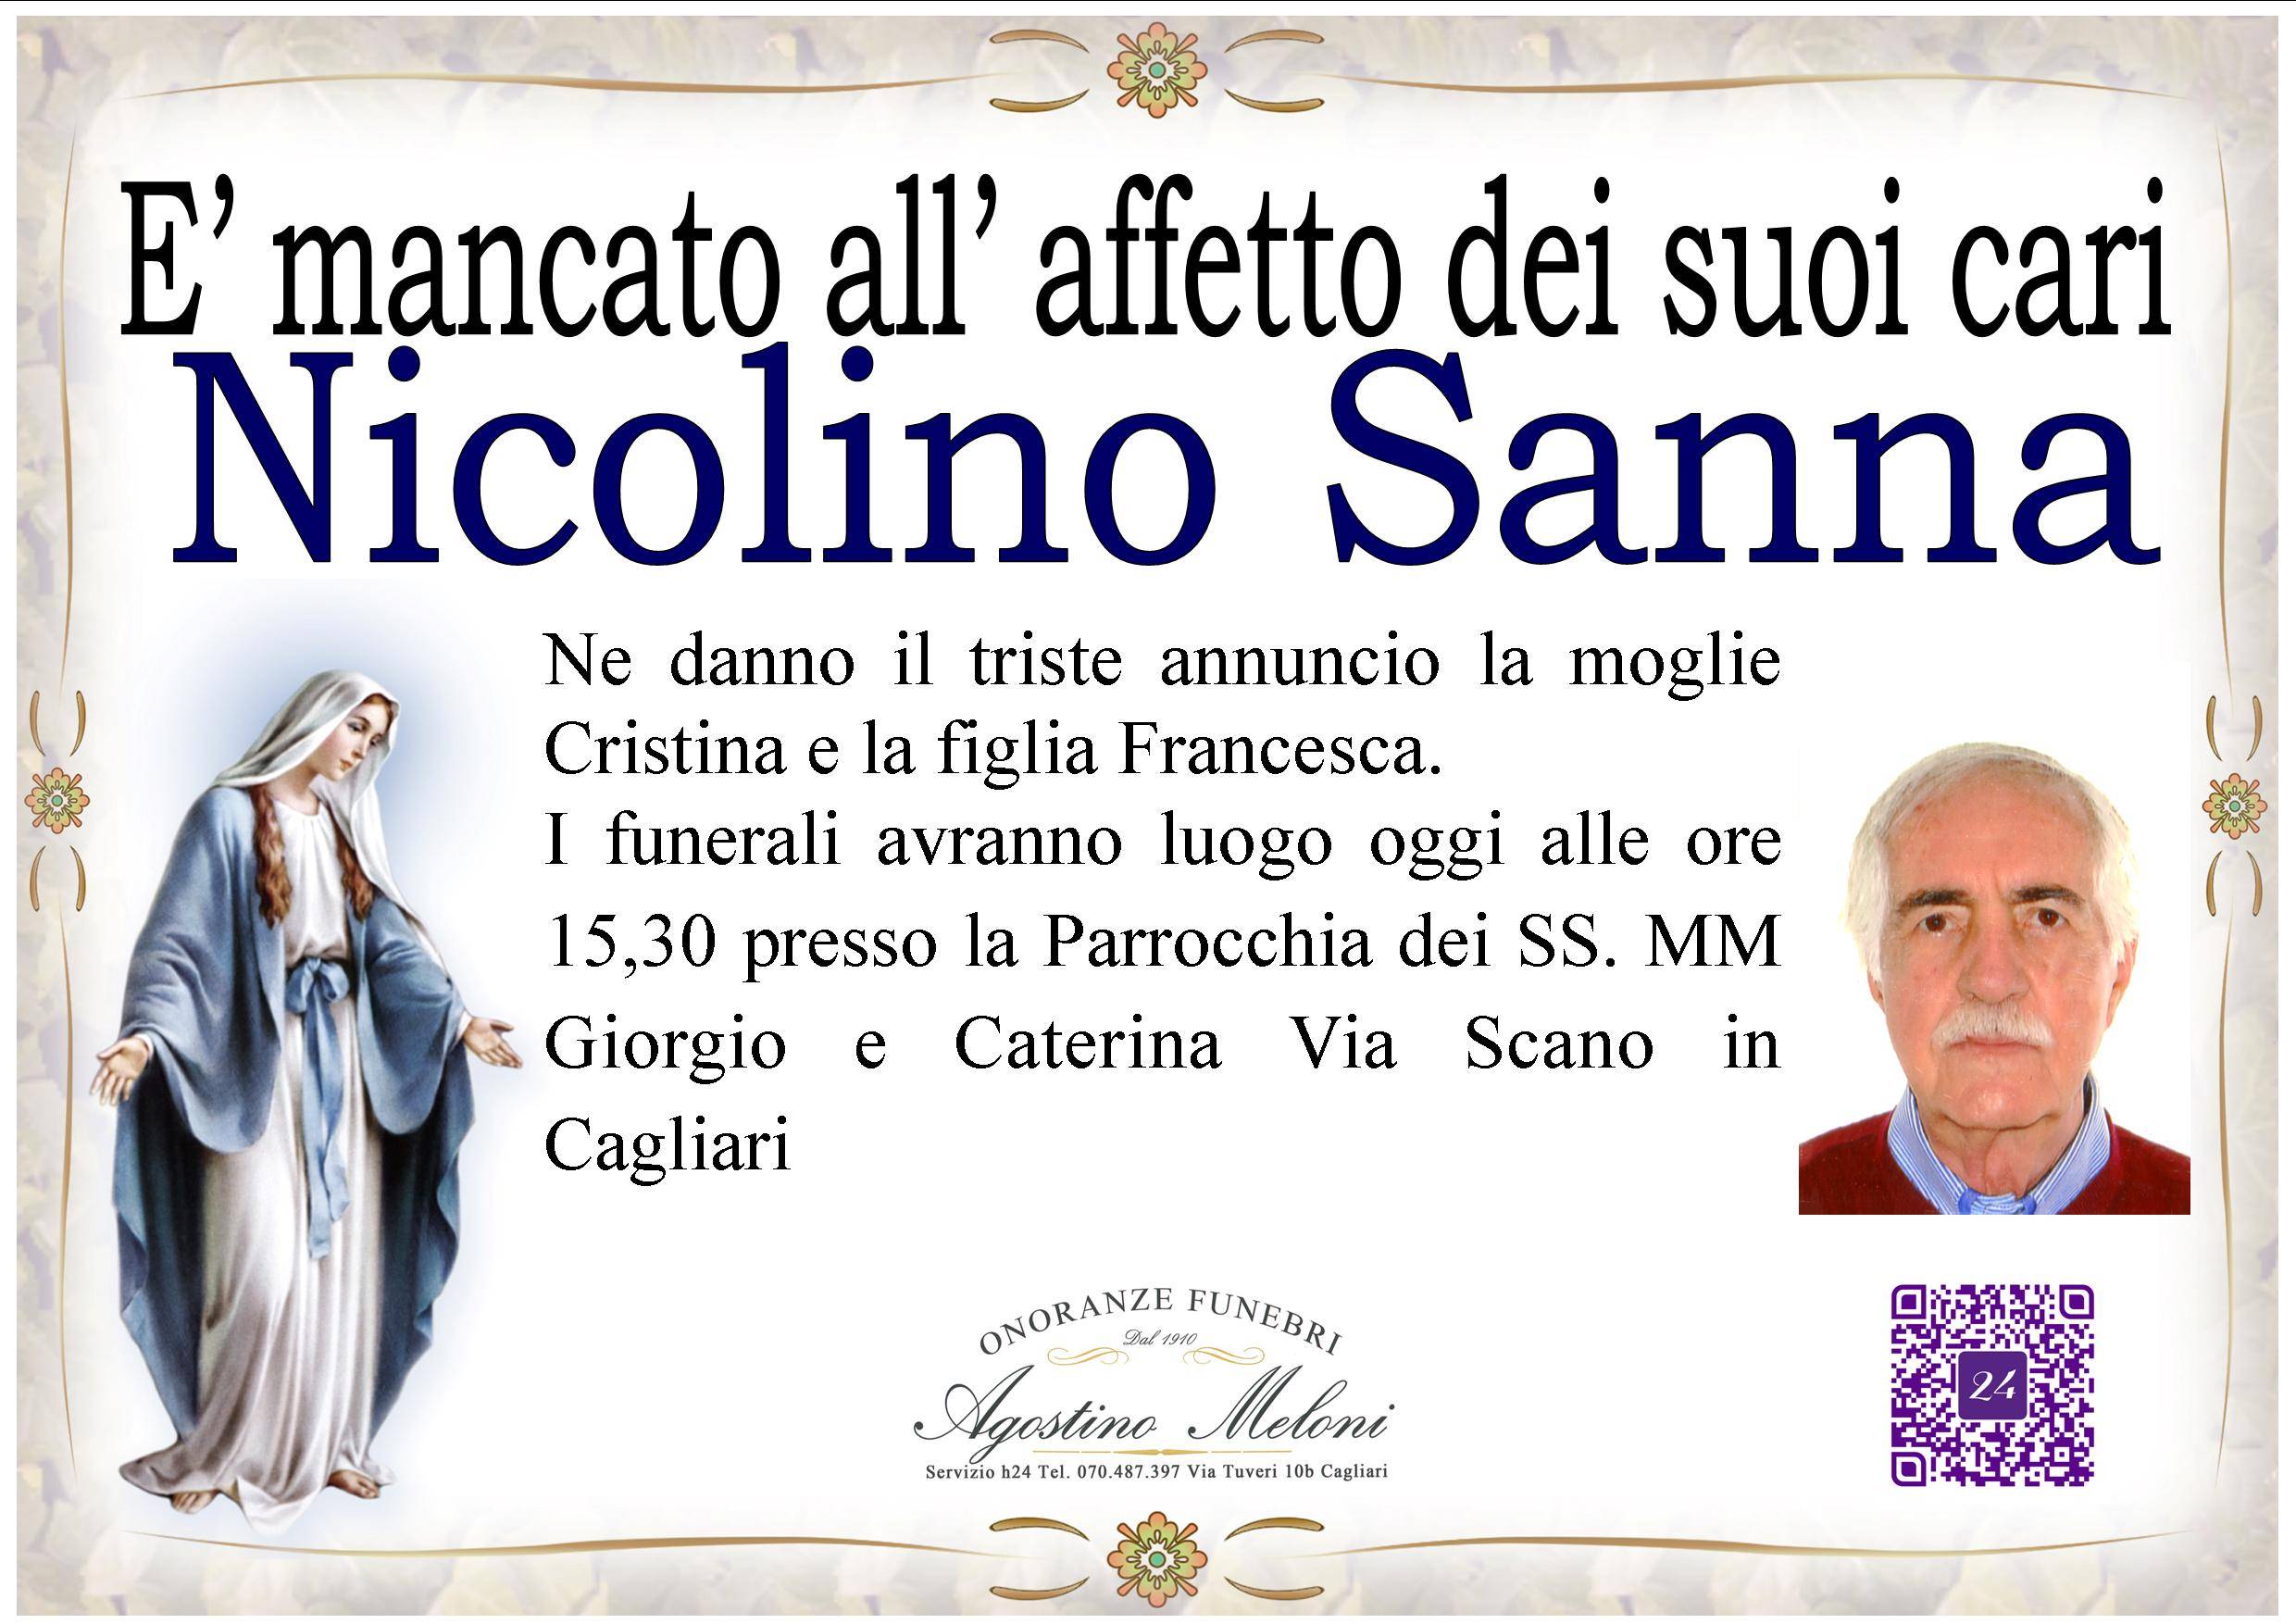 Nicolino Sanna